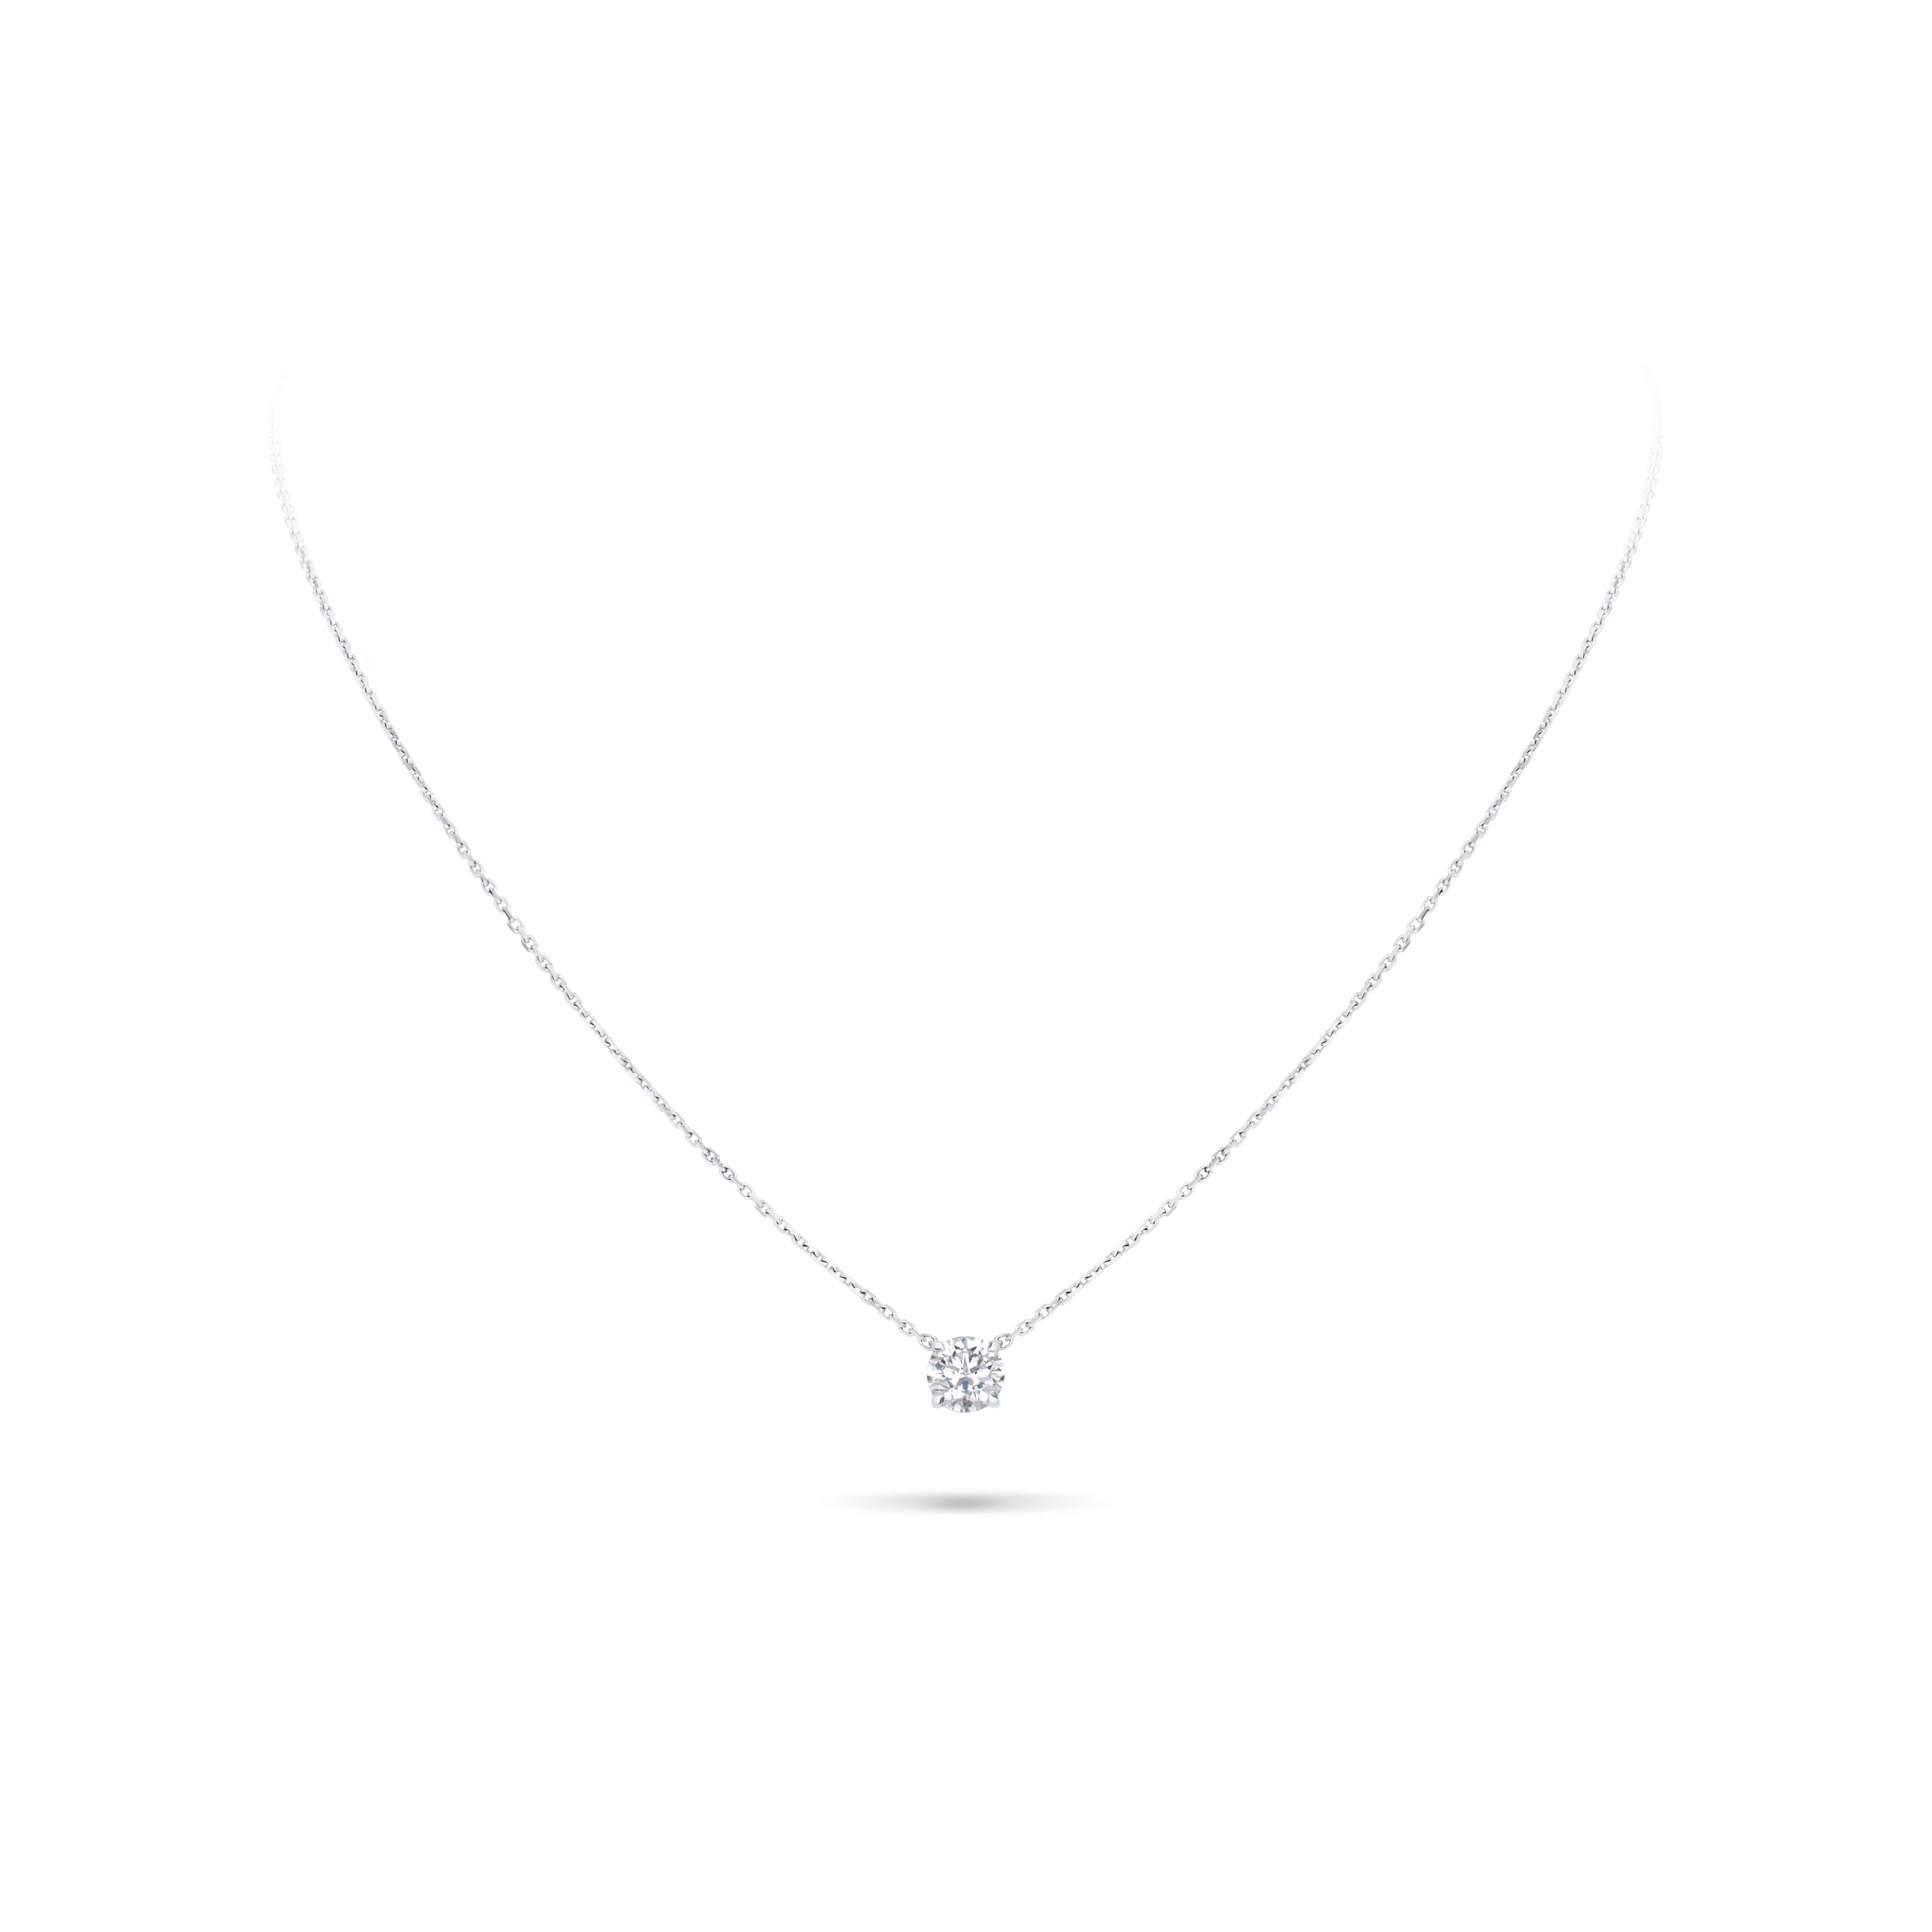 1 carat diamond pendant